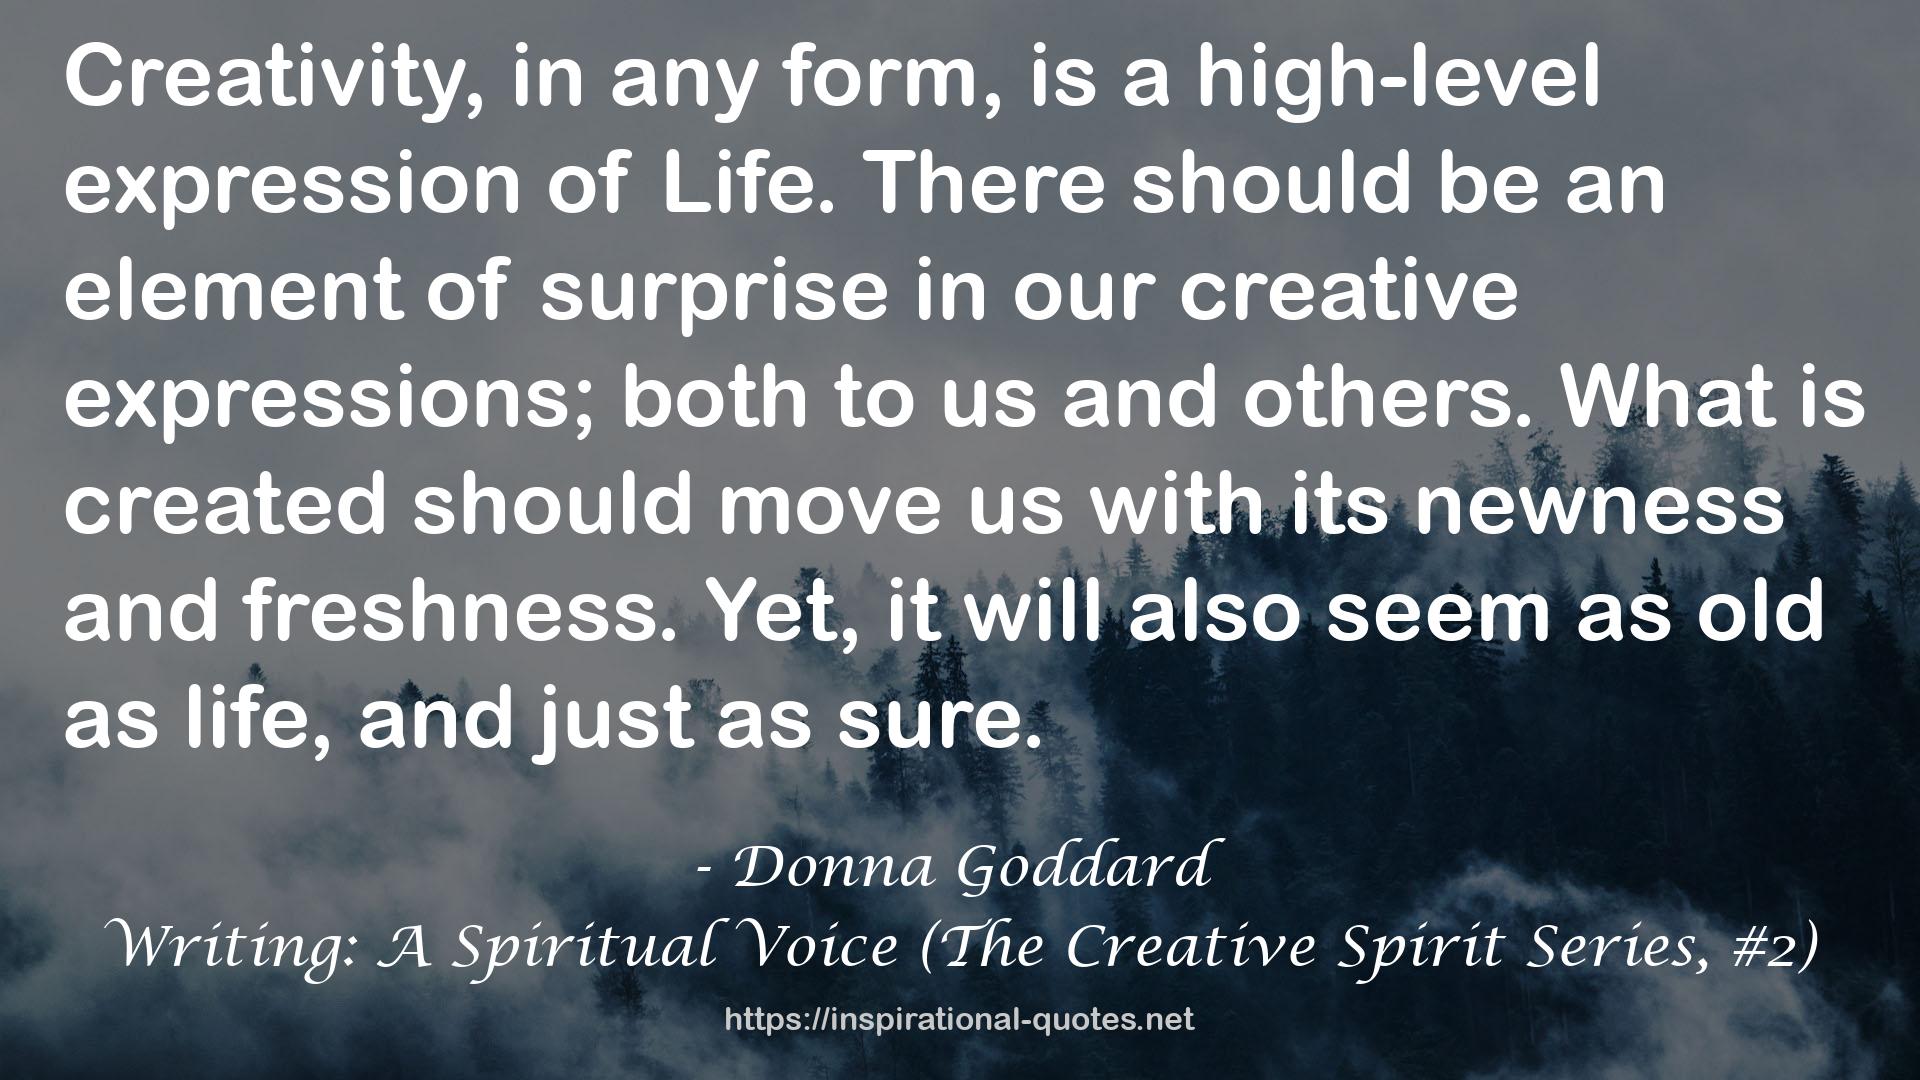 Writing: A Spiritual Voice (The Creative Spirit Series, #2) QUOTES